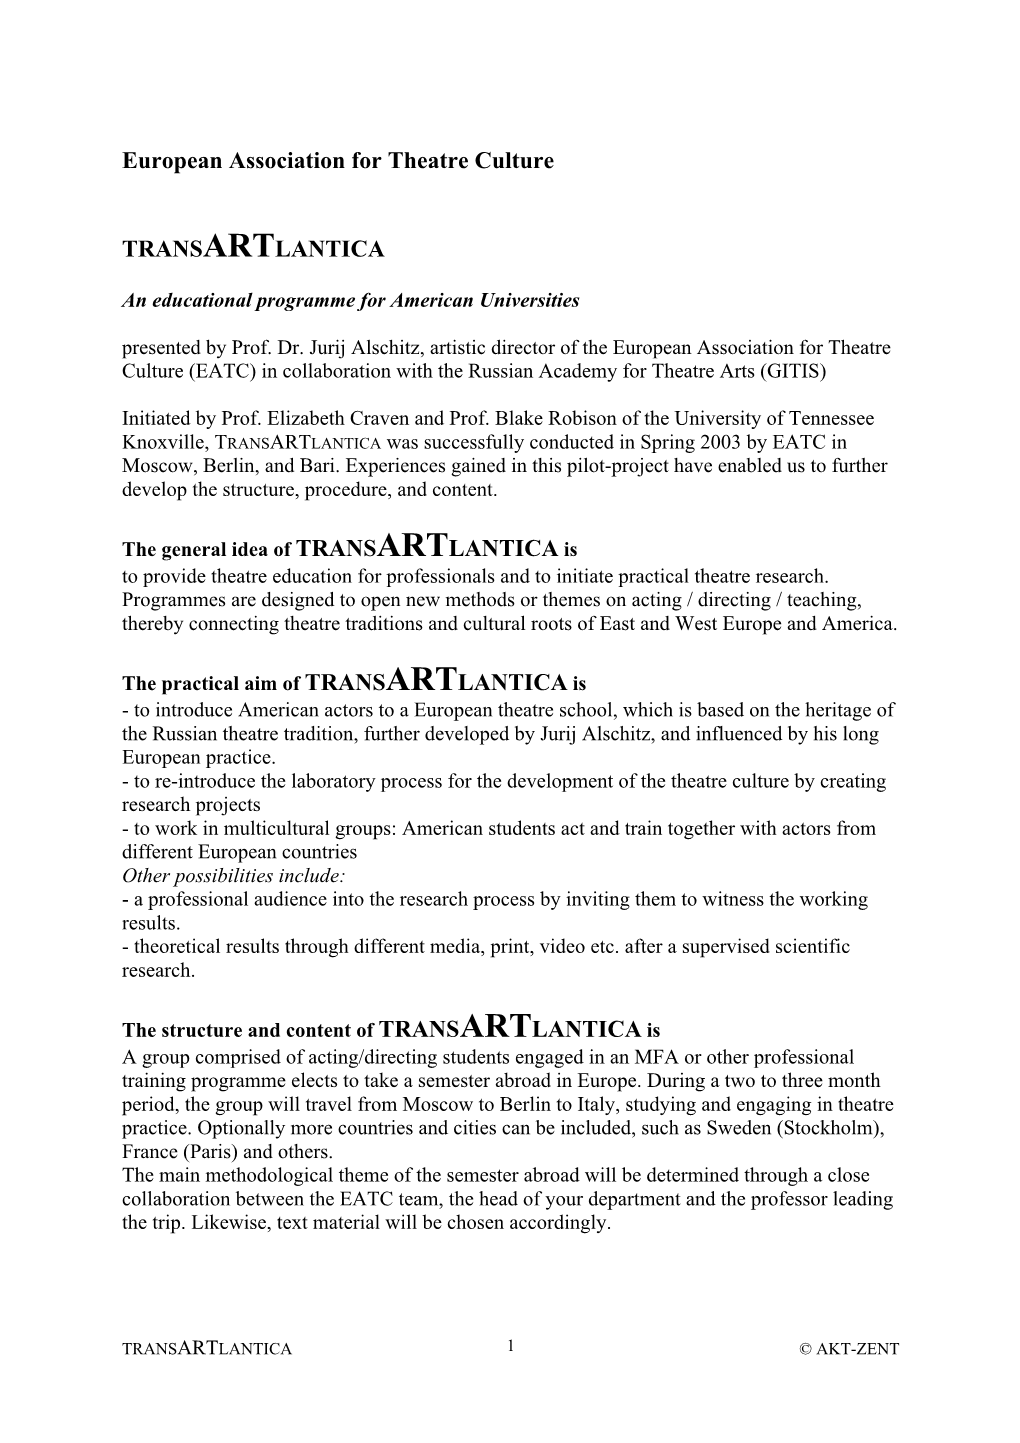 European Association for Theatre Culture TRANSARTLANTICA